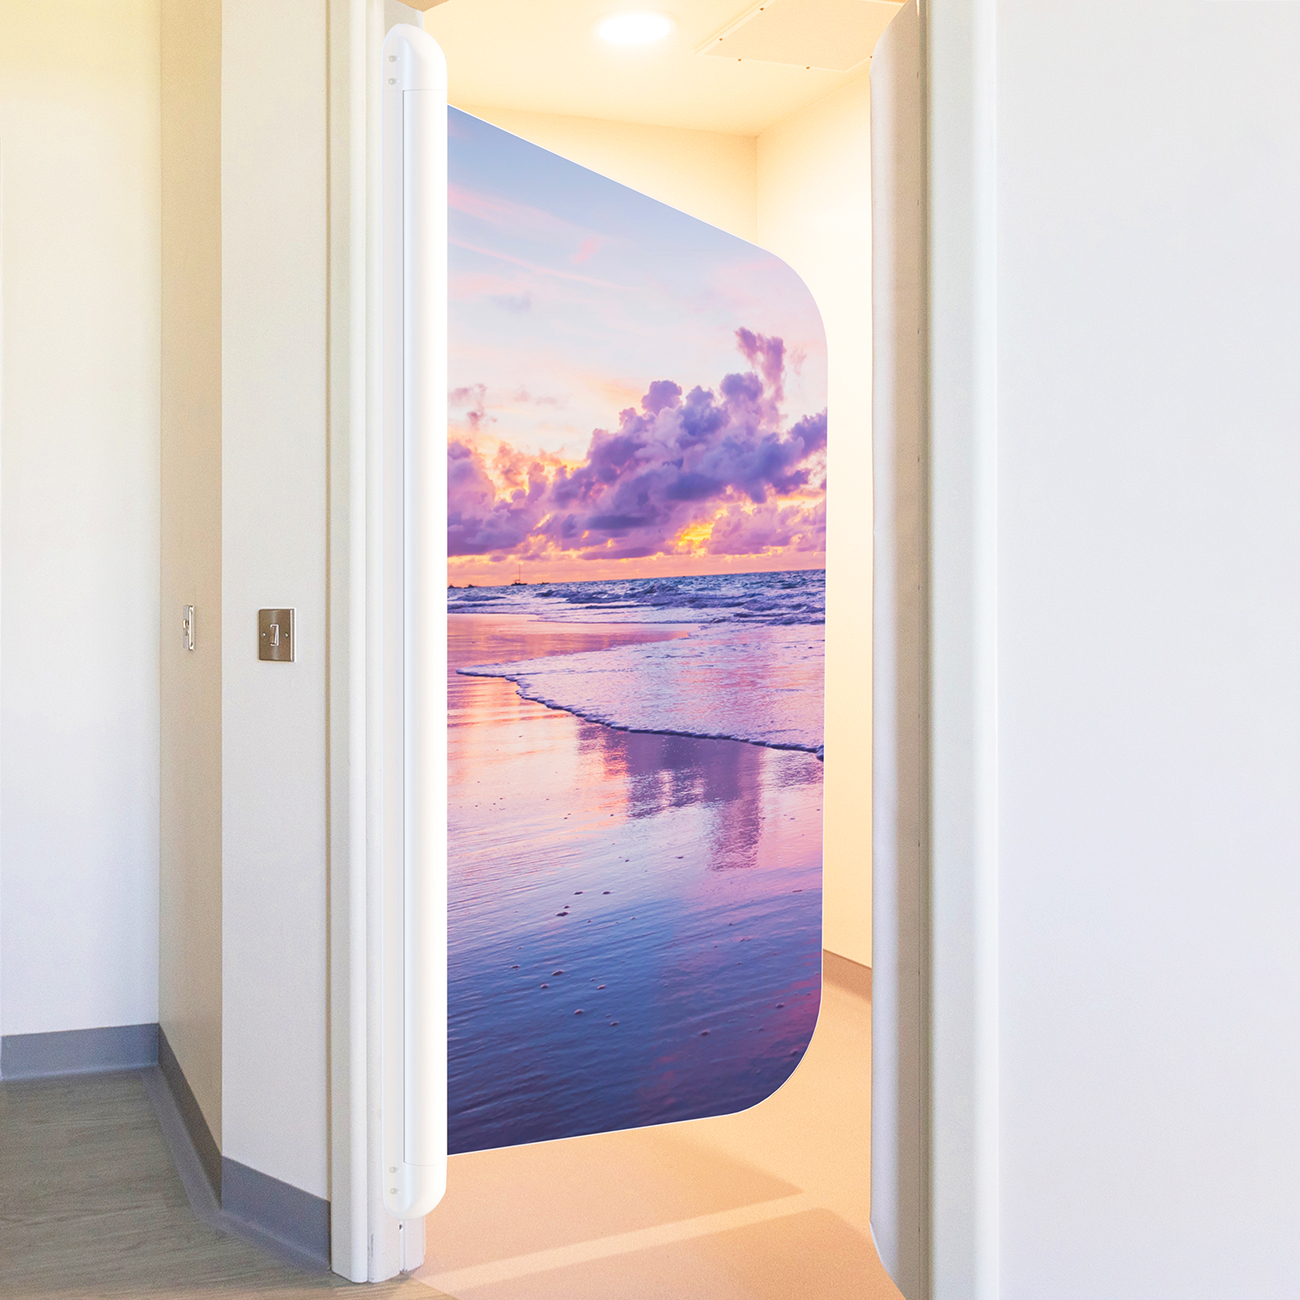 Kingsway's ligature-resistant SHOWER Door System for behavioral health facilities.